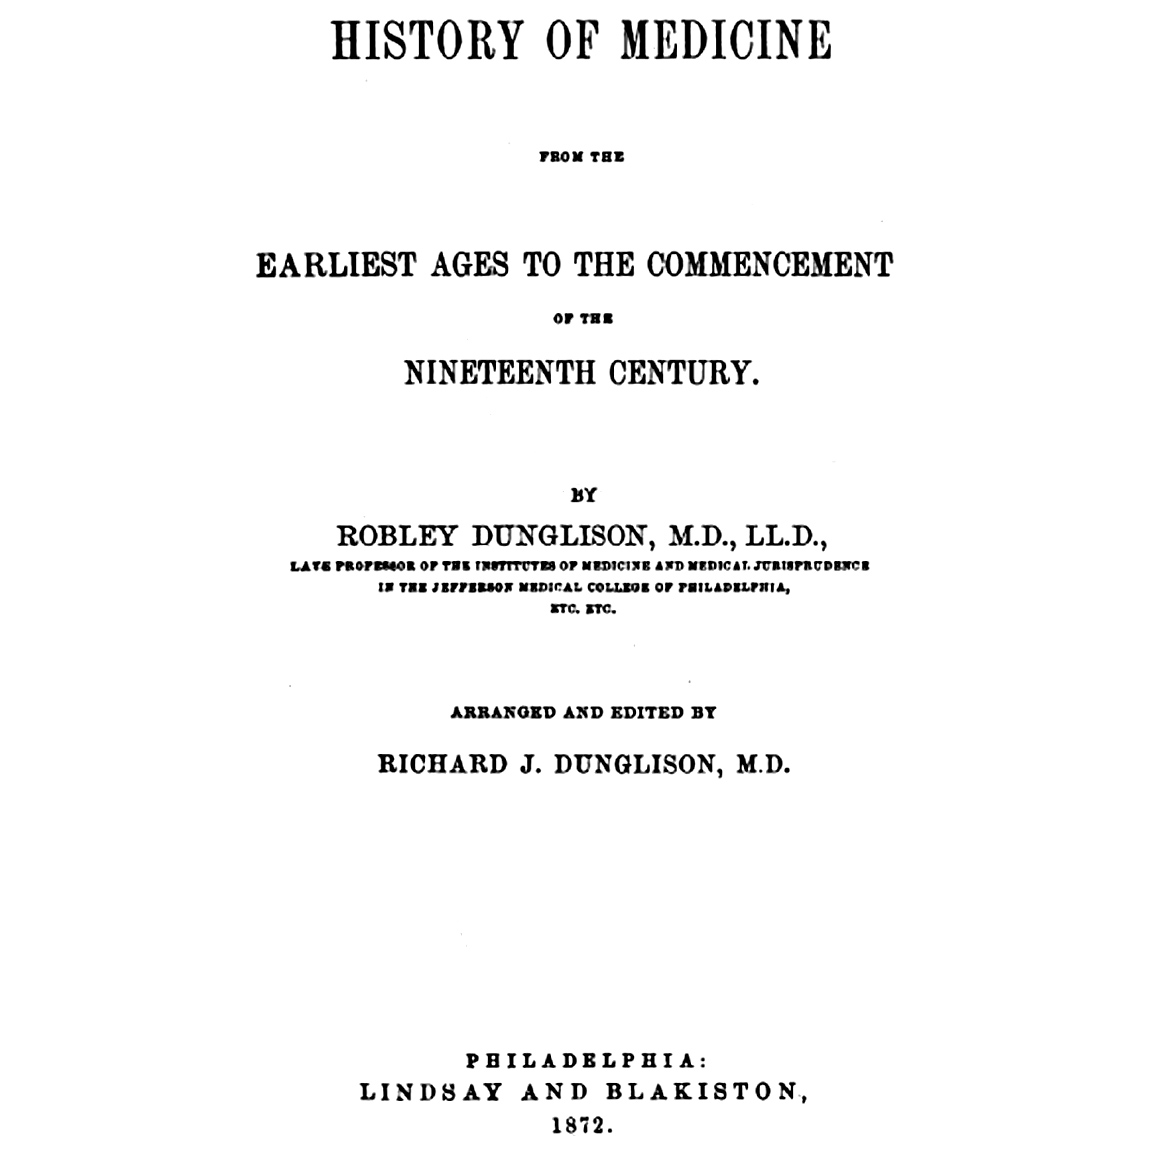 1872-DUNGLISON-History-Medicine-title